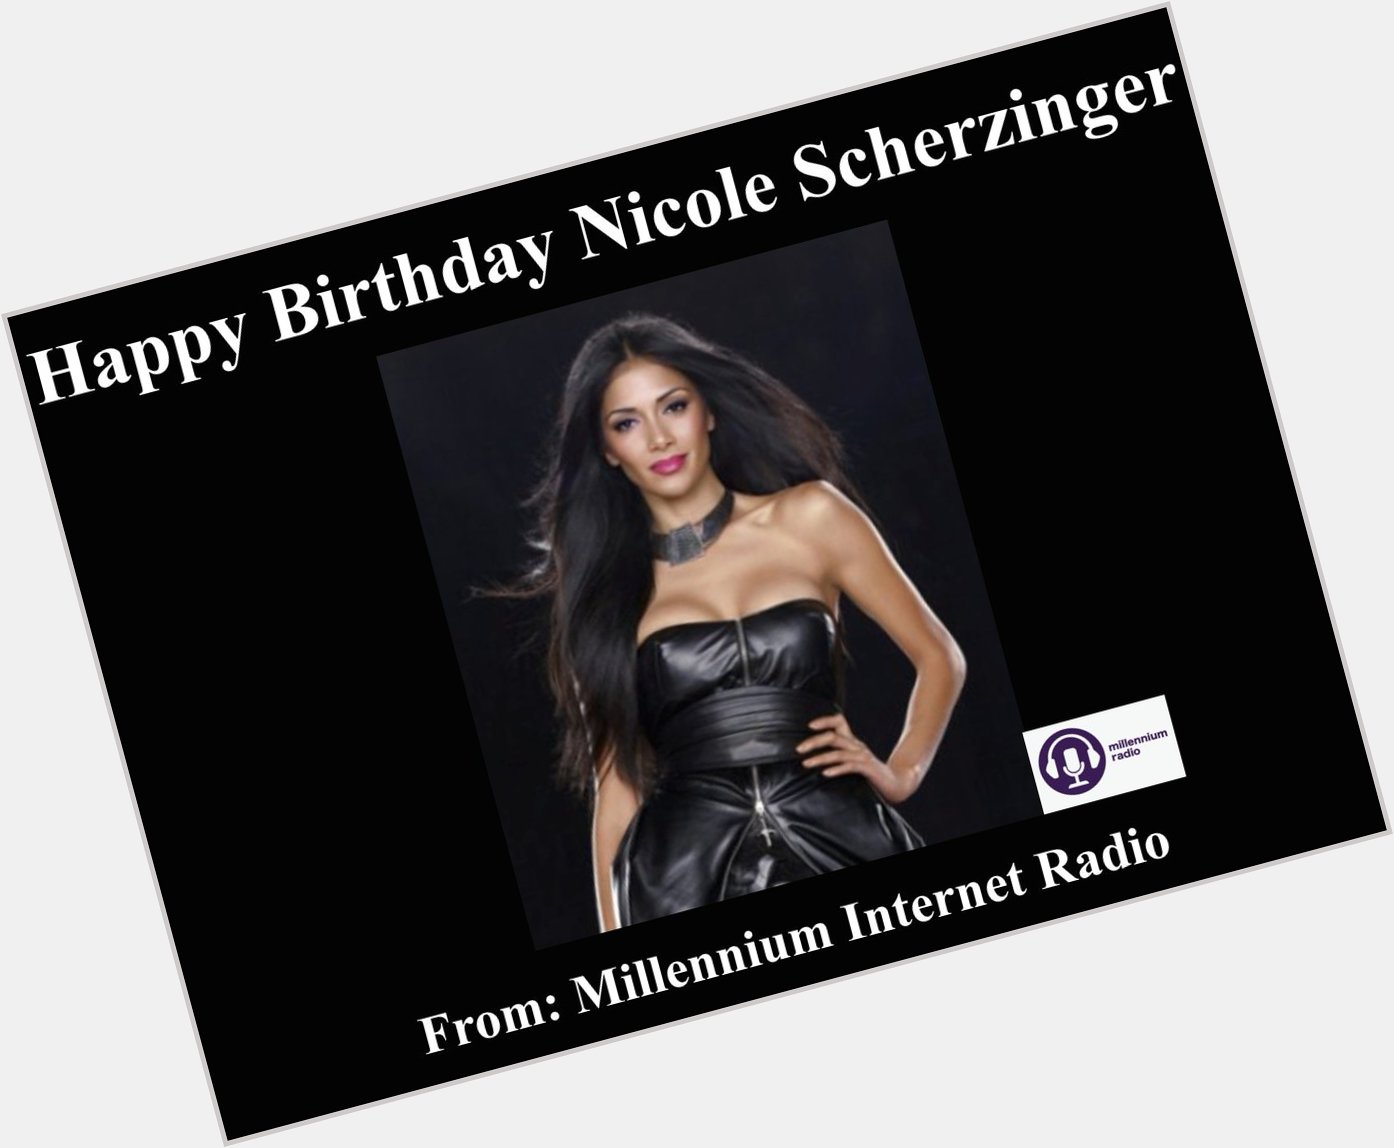 Happy Birthday to Nicole Scherzinger!! She was 1/4 member of the Pussycat Dolls. 